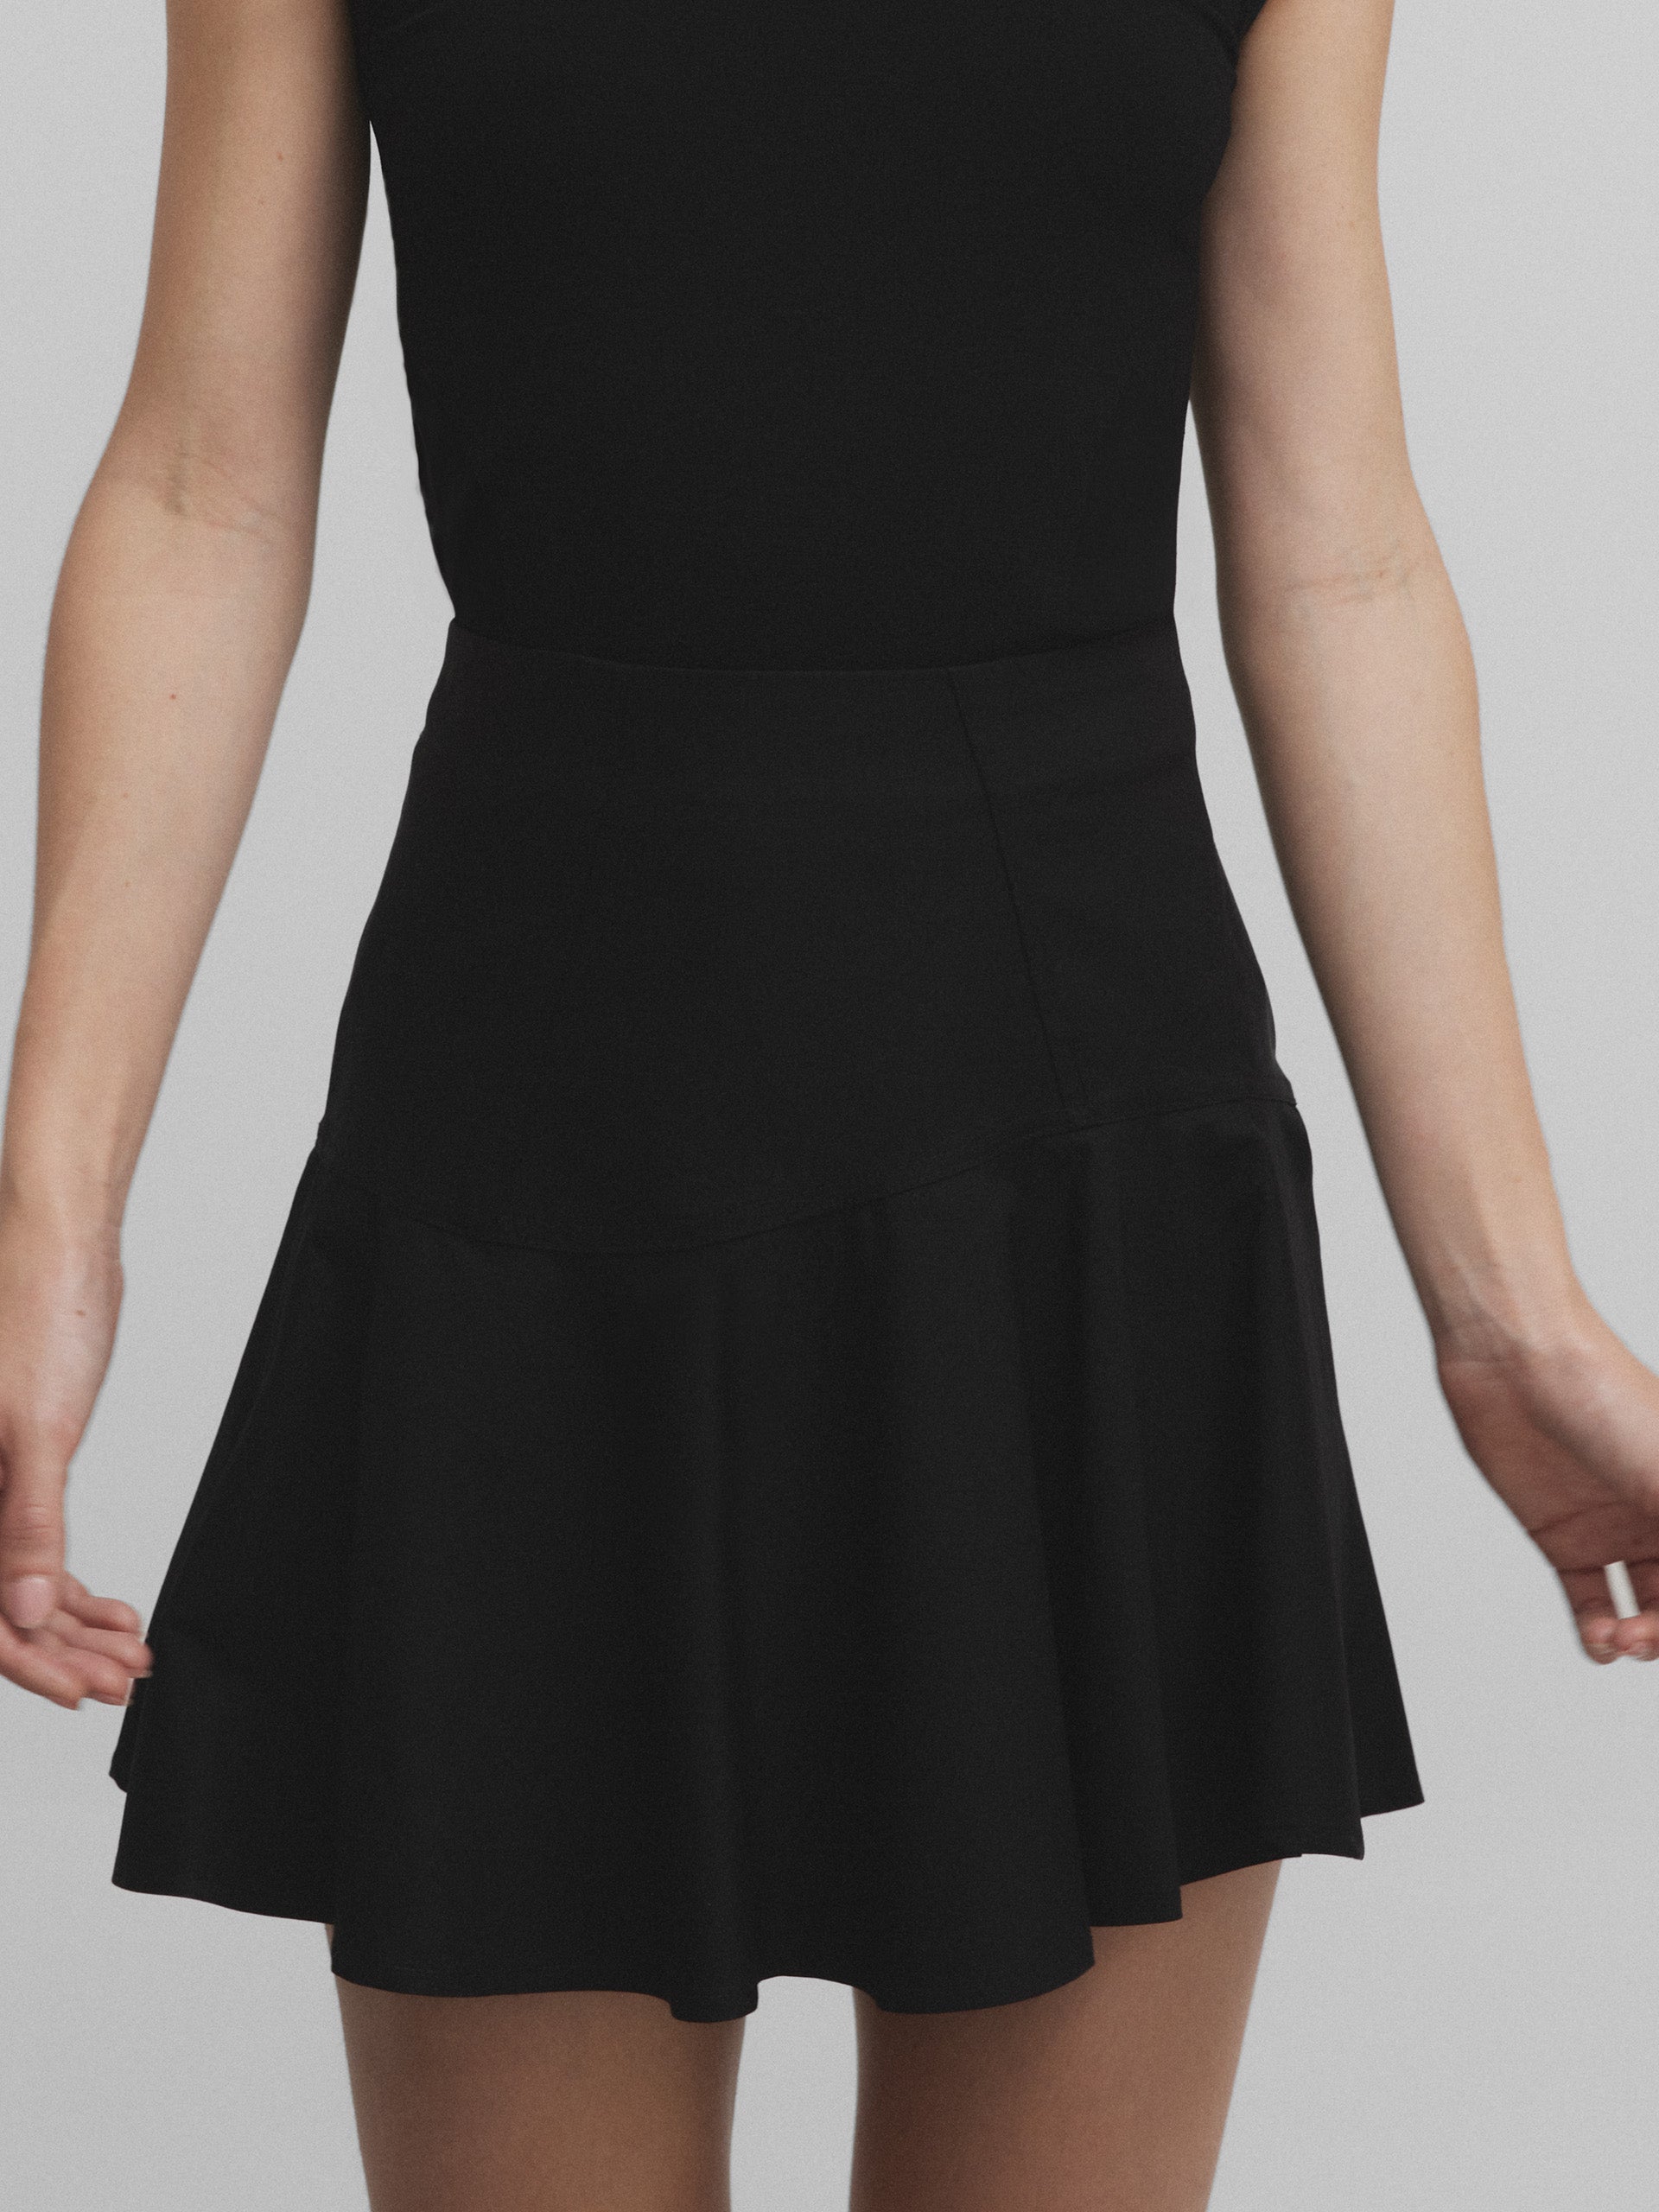 Black ruffled mini skirt